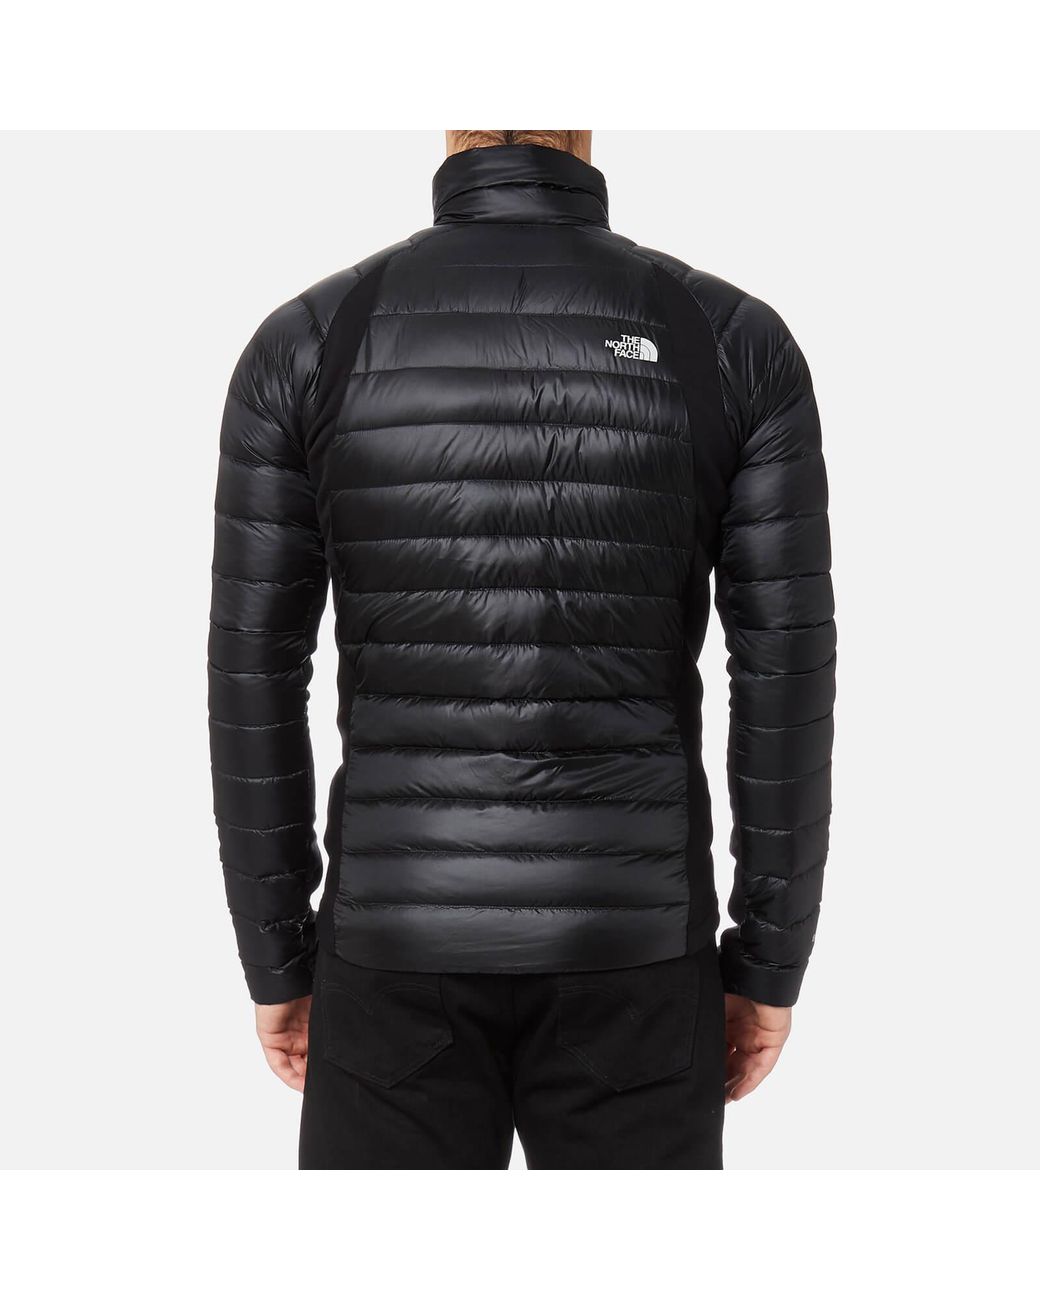 North Face Men's Crimptastic Hybrid Jacket Sale, 44% OFF |  kashmirifoodie.com